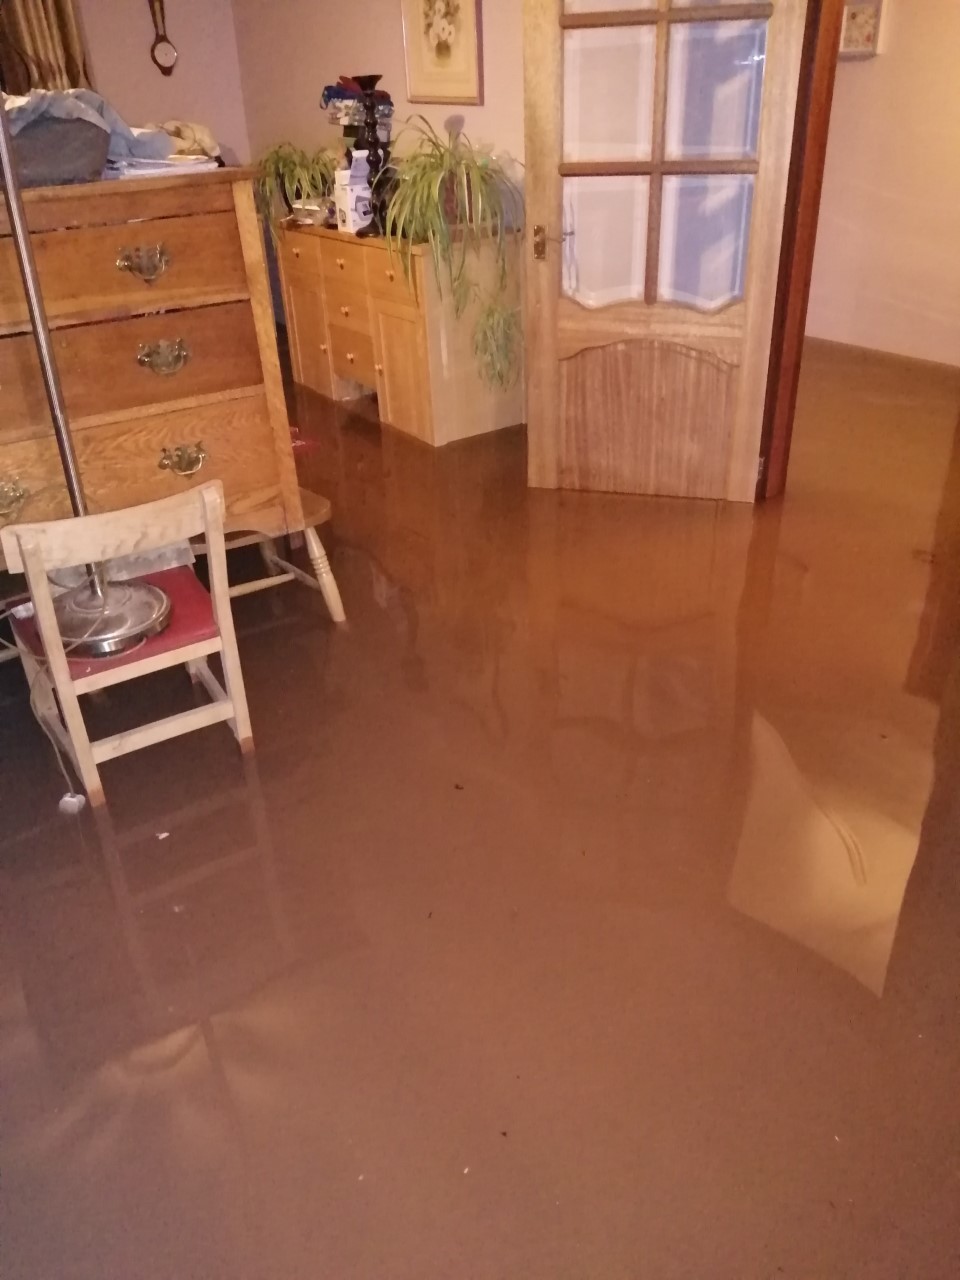 David Jones house suffered heavy flooding last week. 